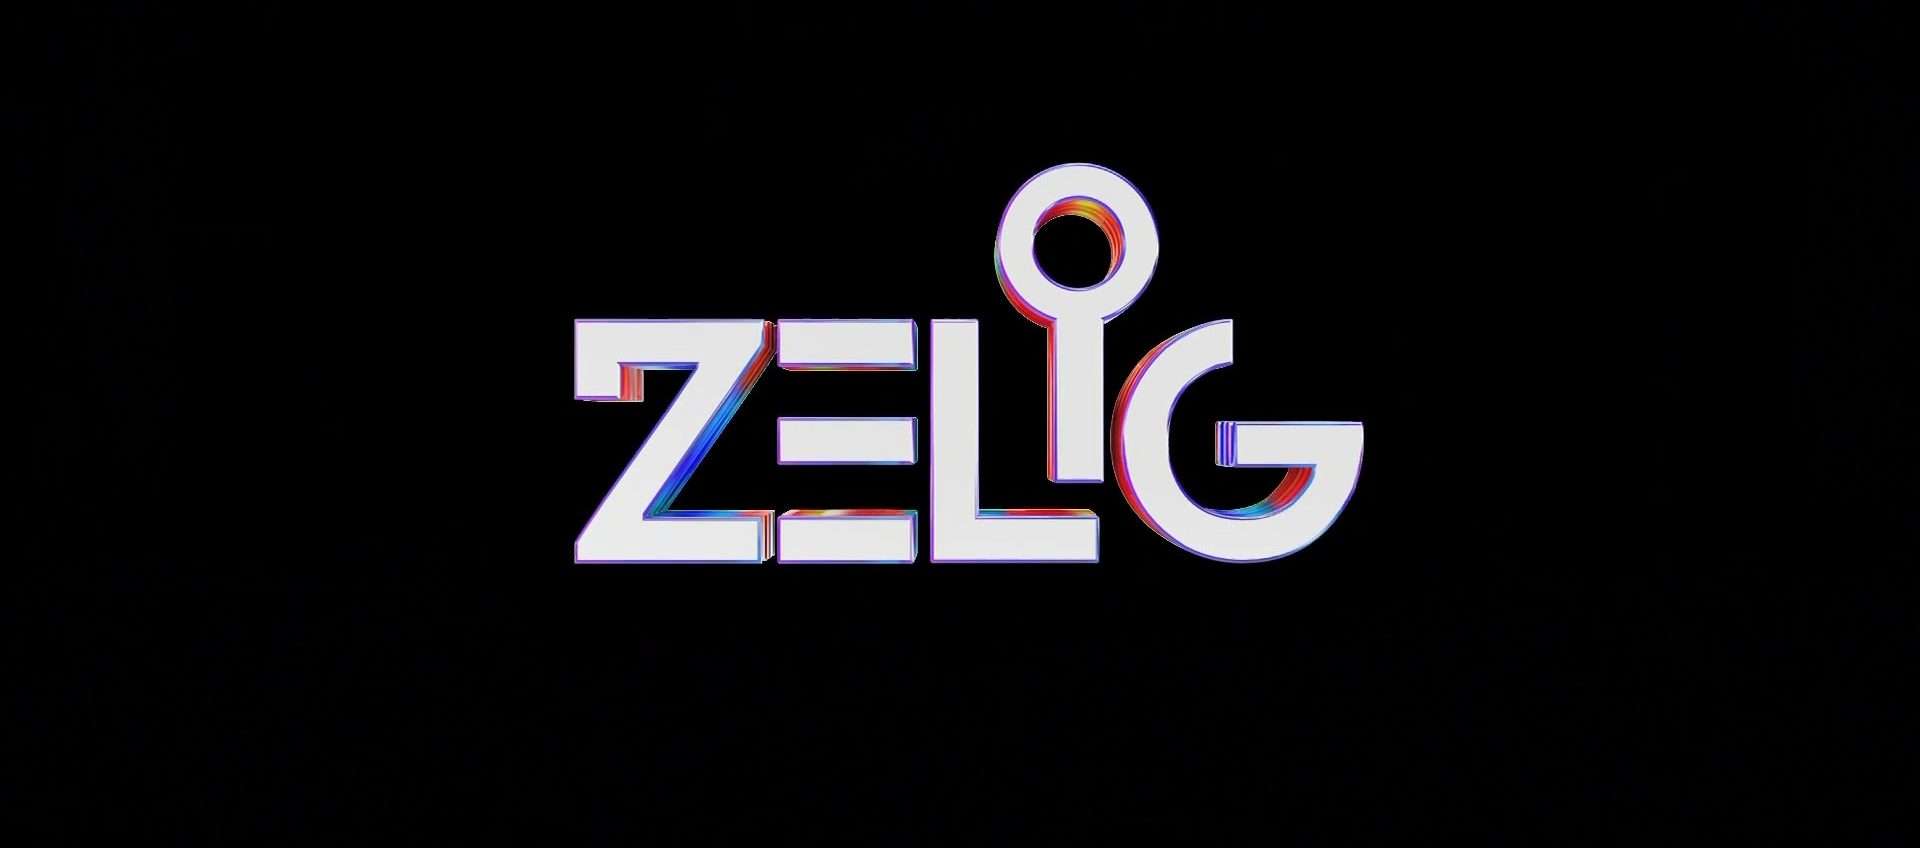 Come vedere Zelig 21 in streaming dall'estero